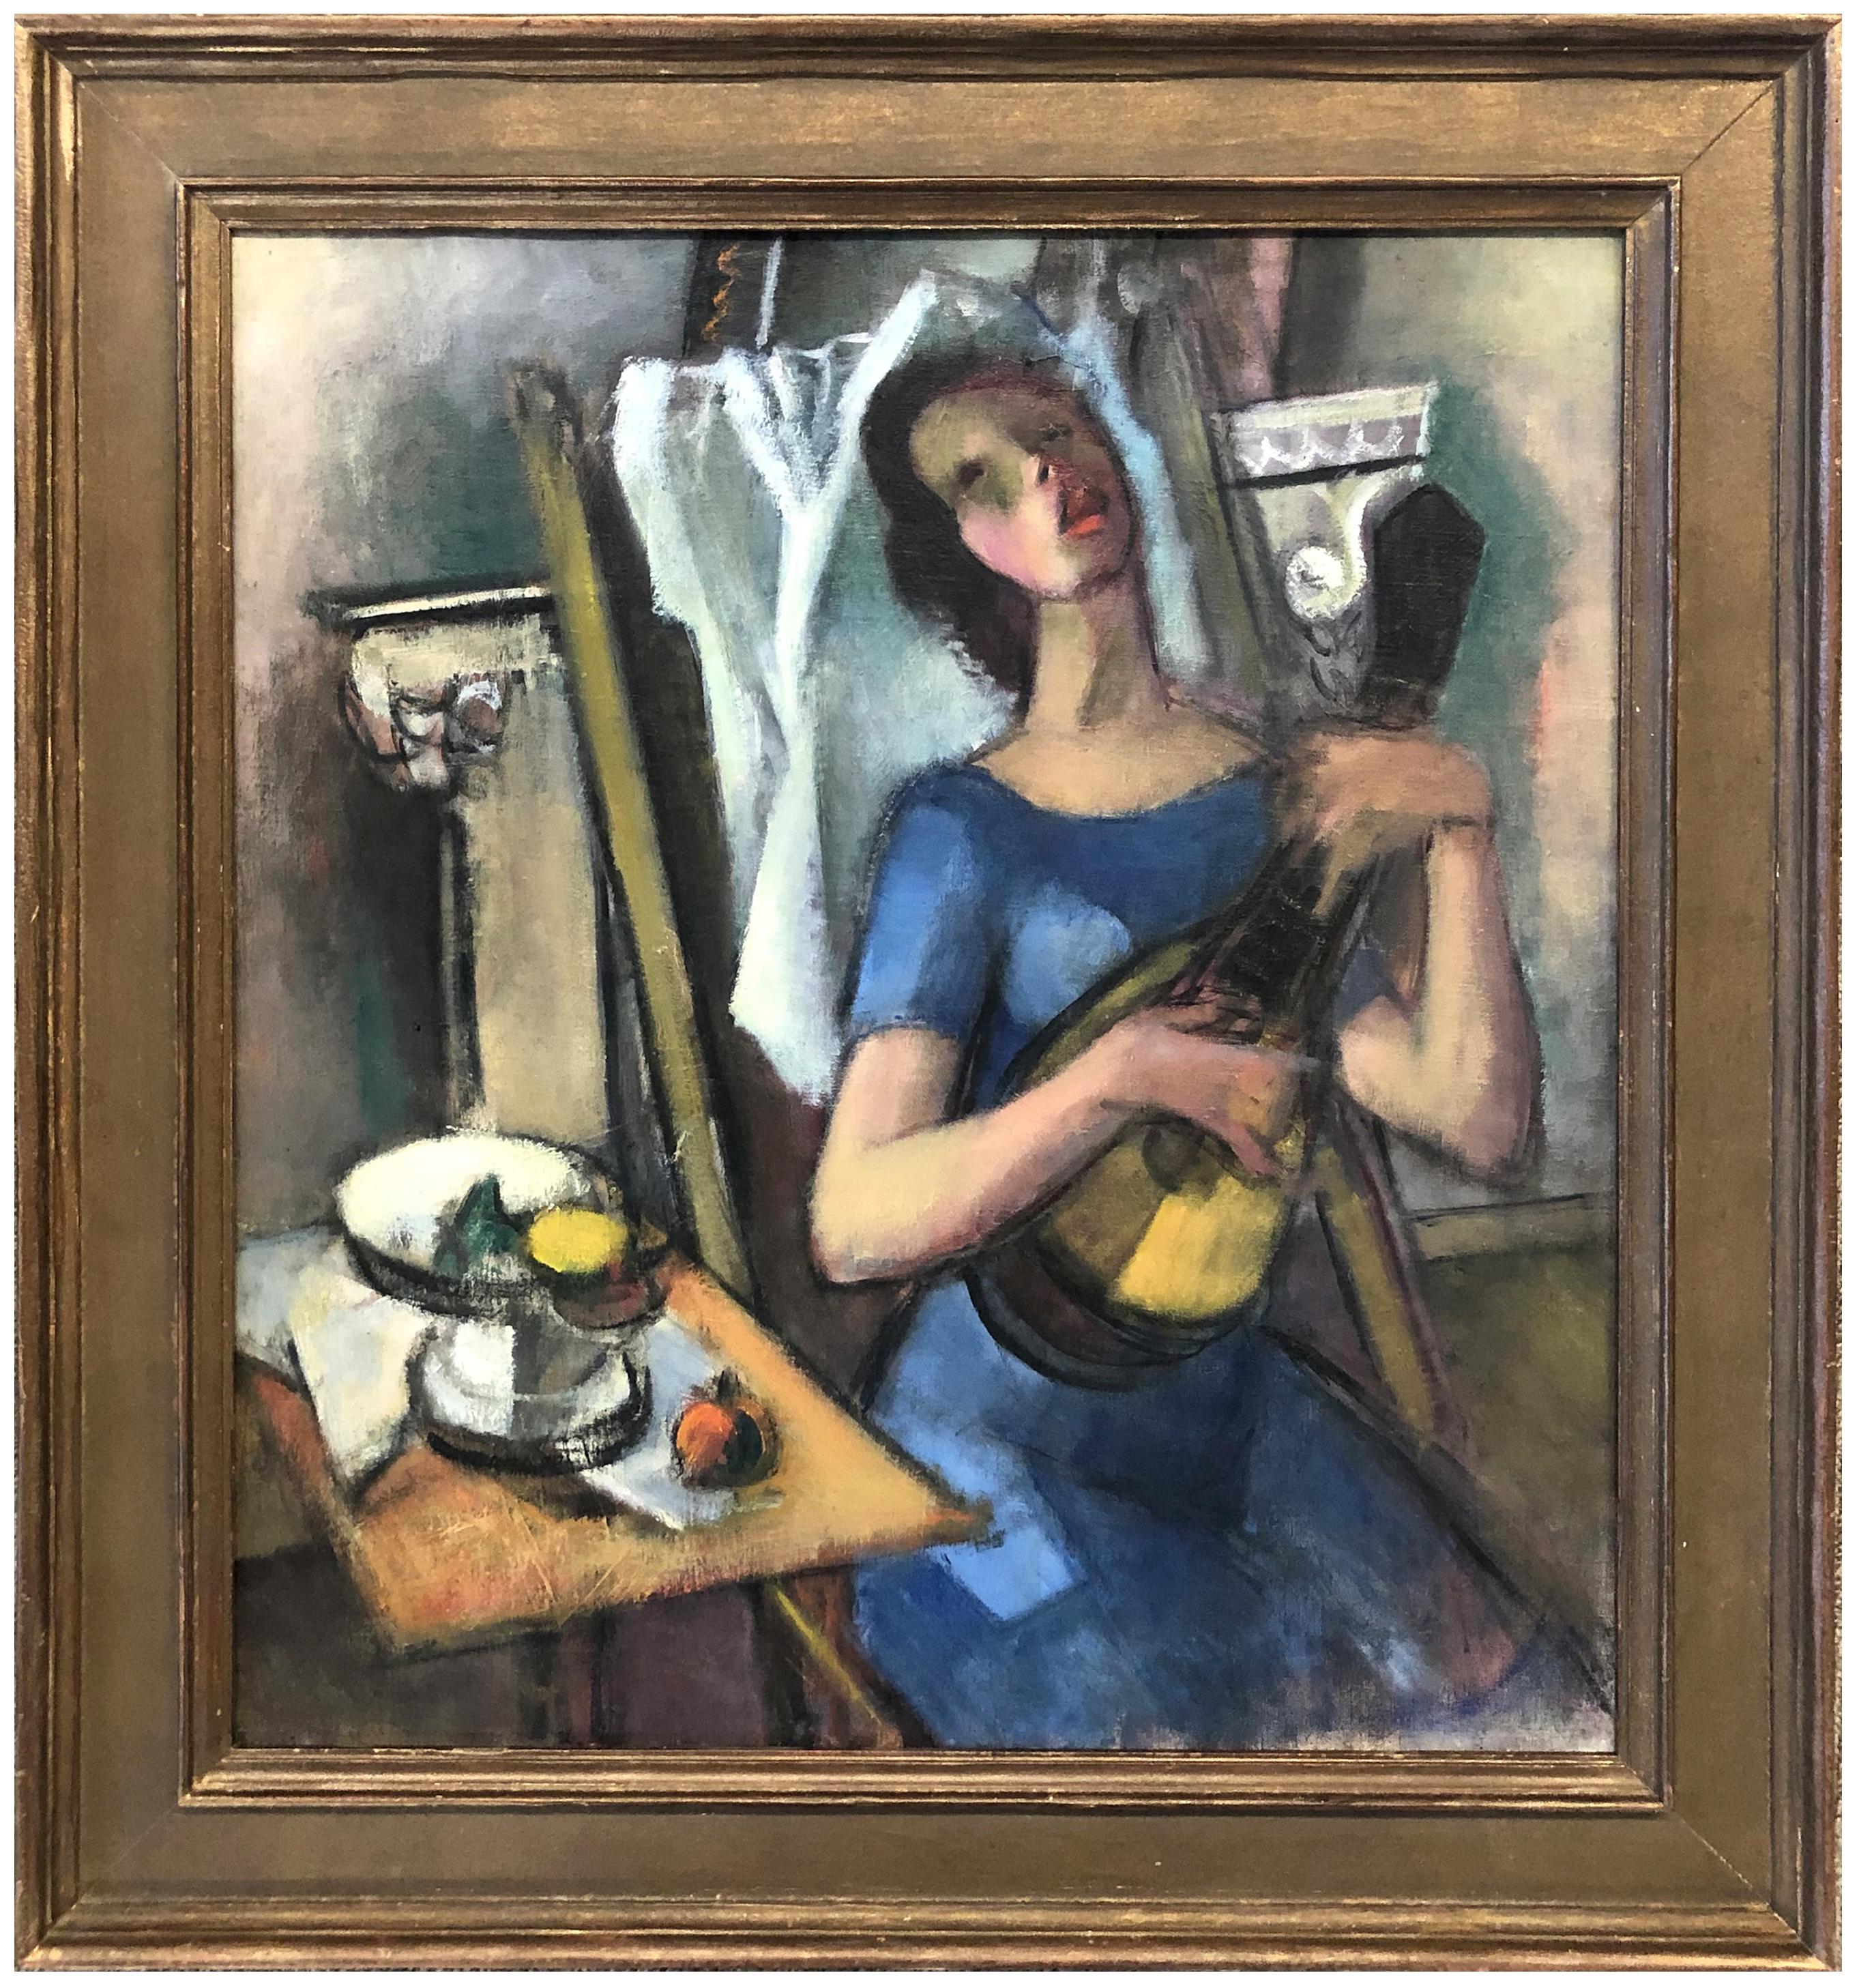 Simka Simkhovitch Figurative Painting - Woman with a Guitar, Cubism